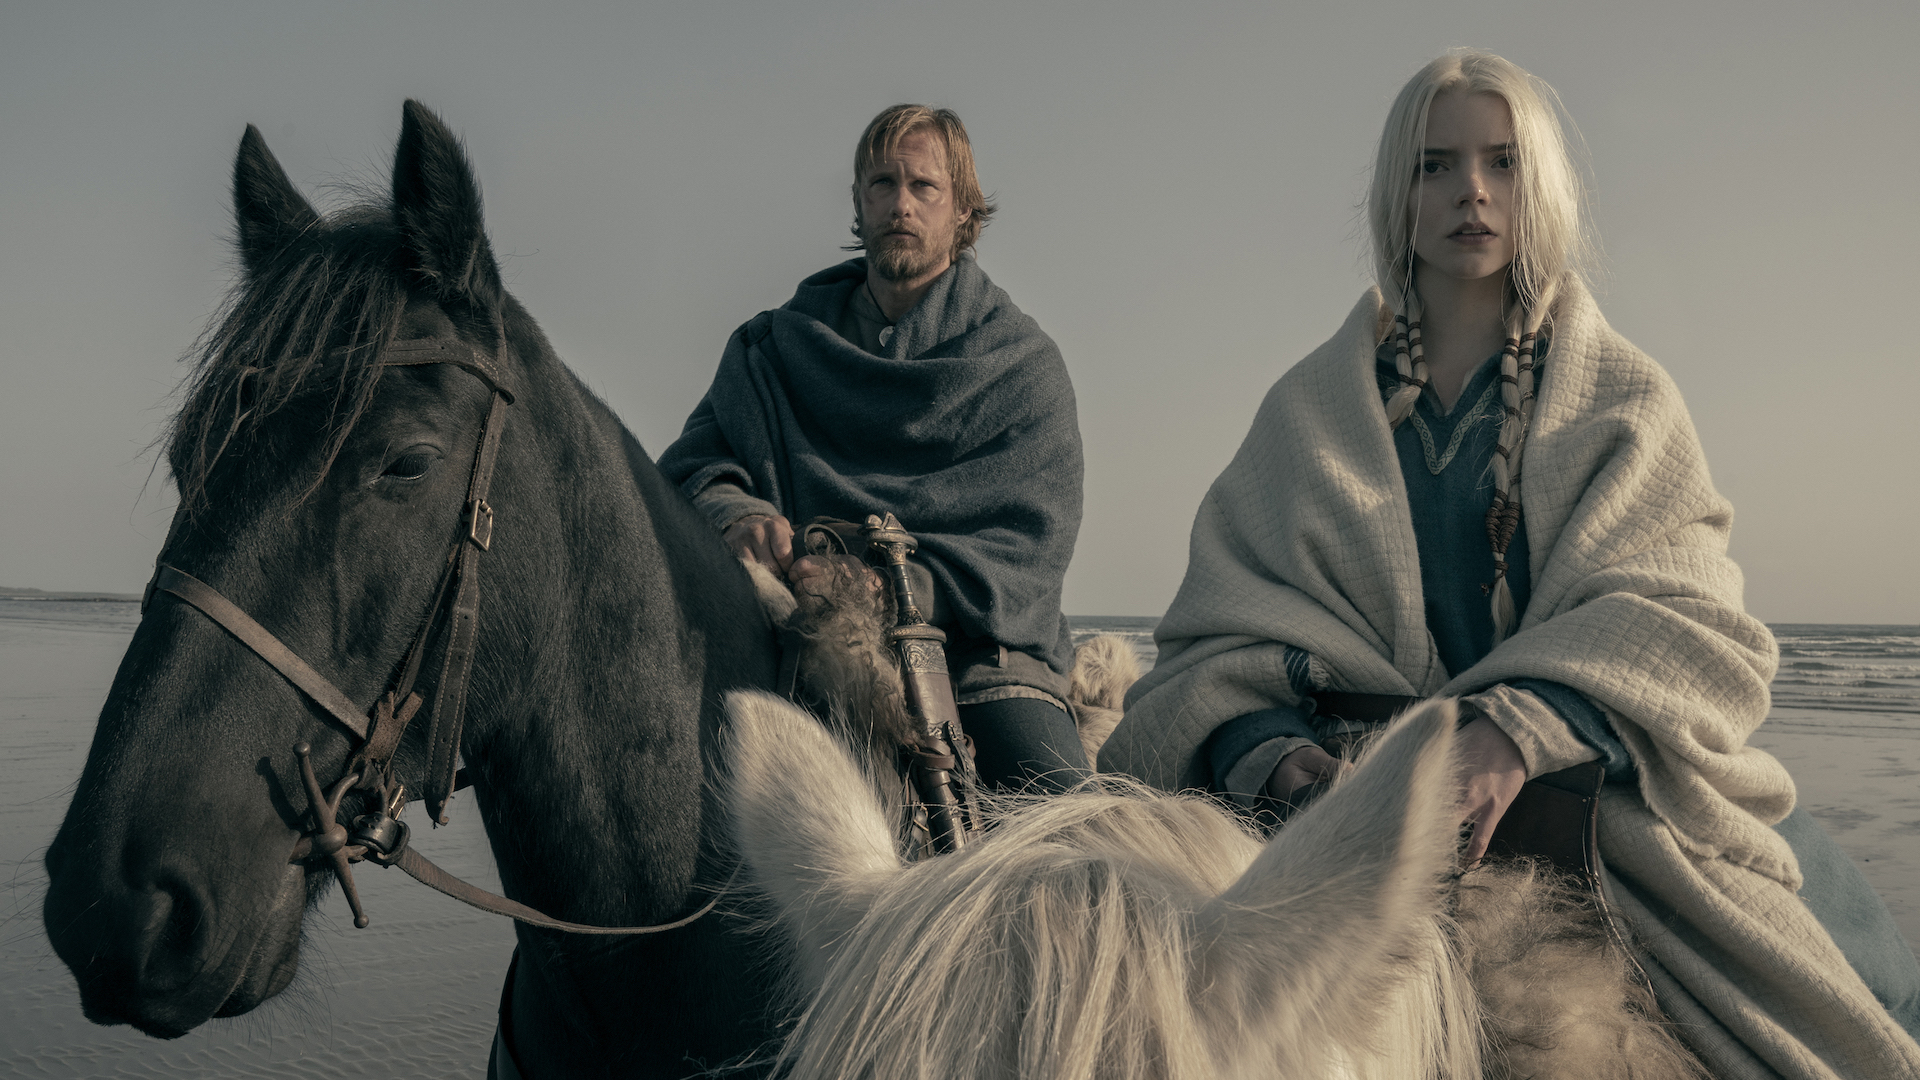 Alexander Skarsgård and Anya Taylor-Joy in the film, The Northman